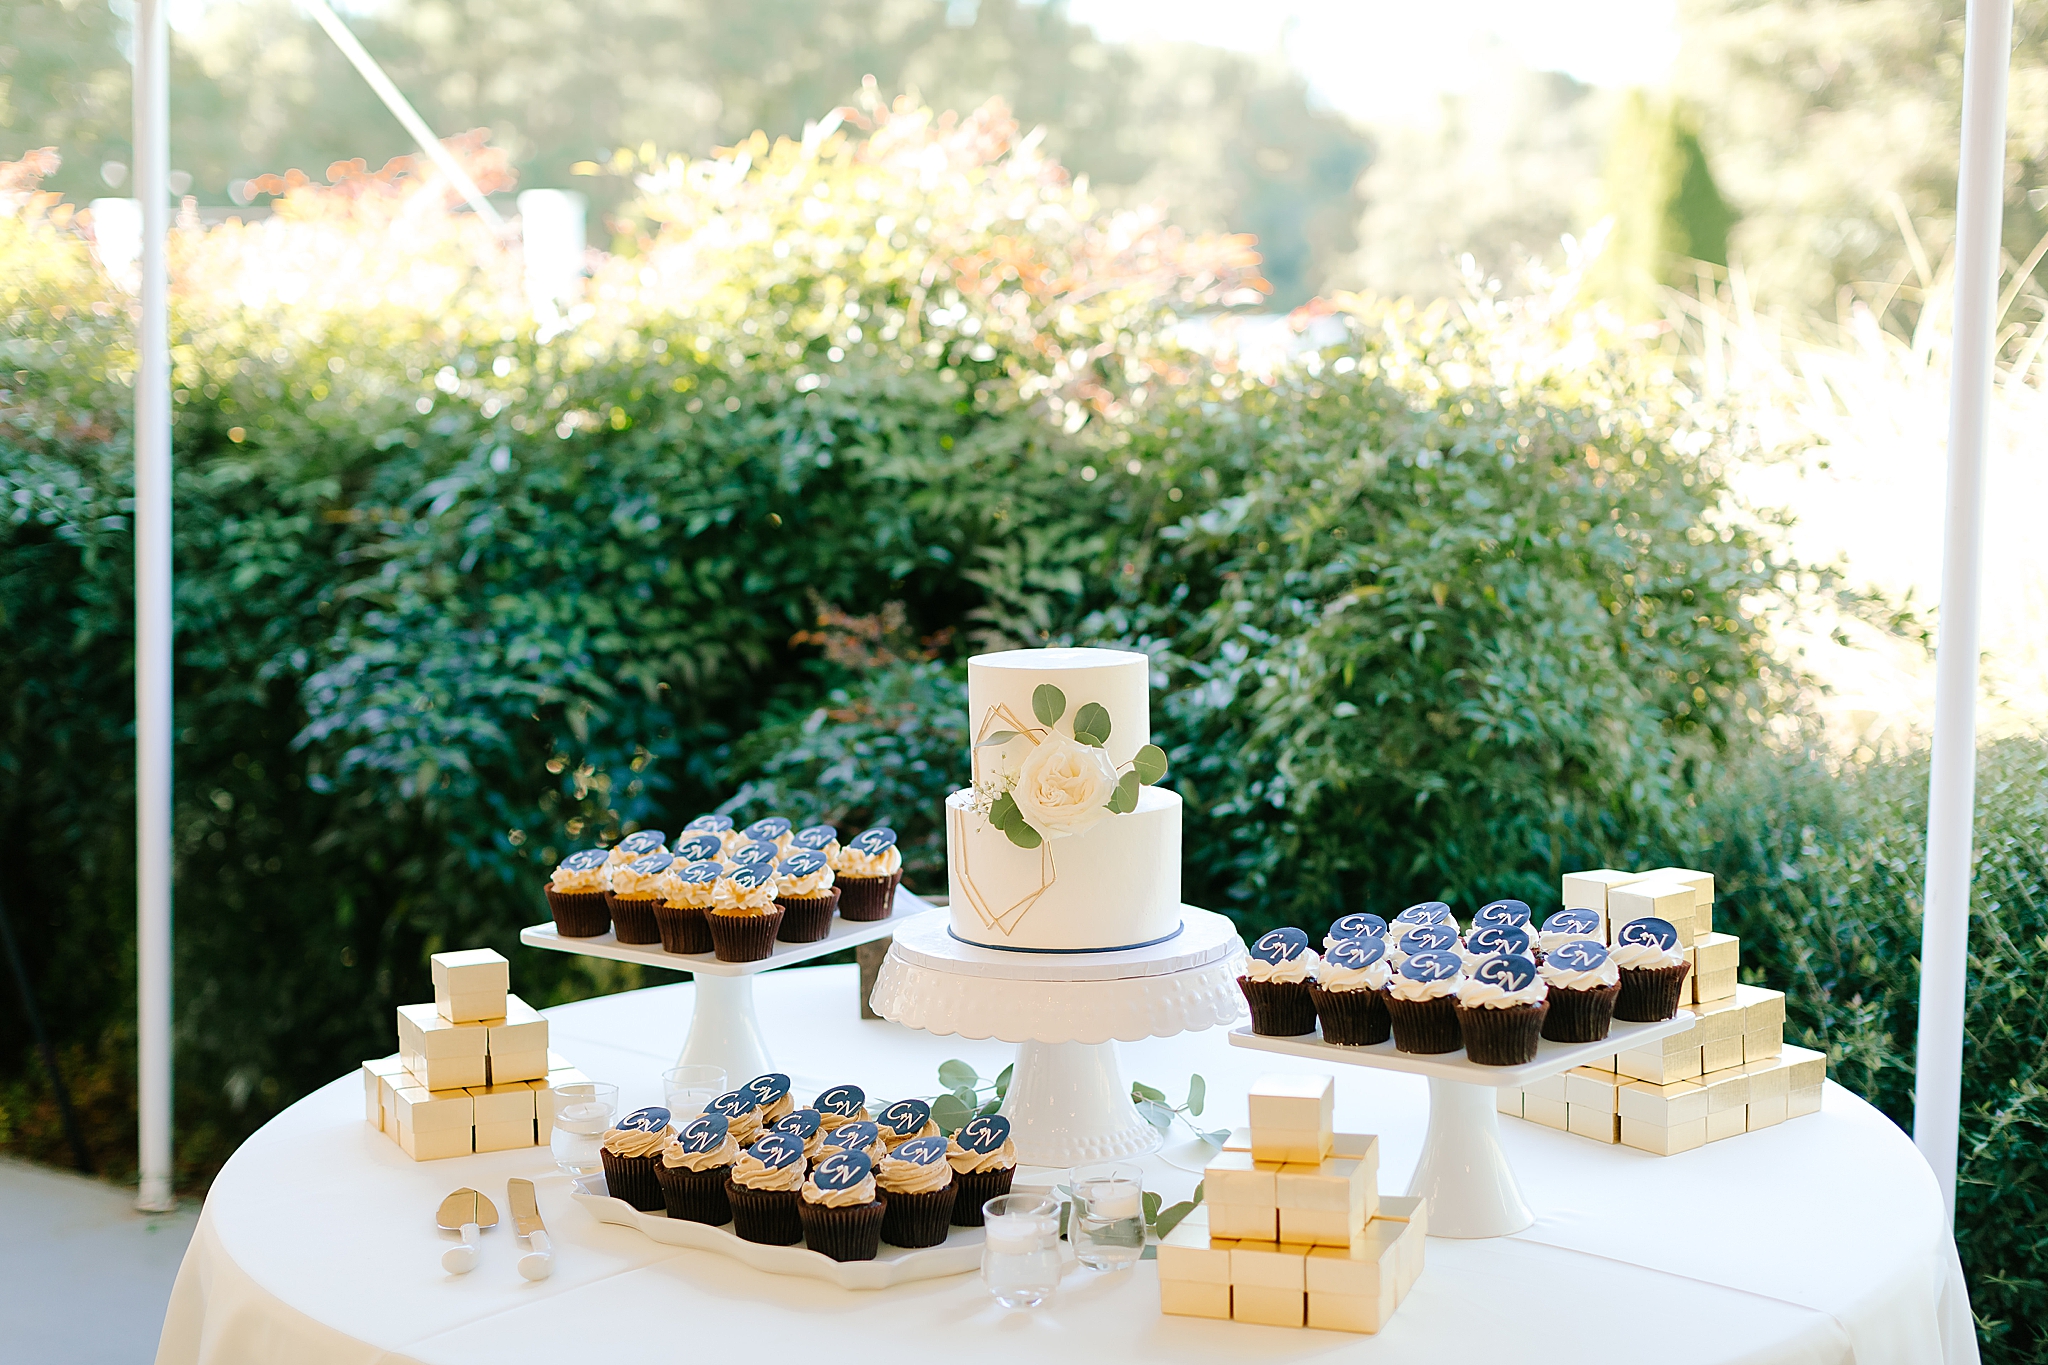 dessert table for garden wedding reception